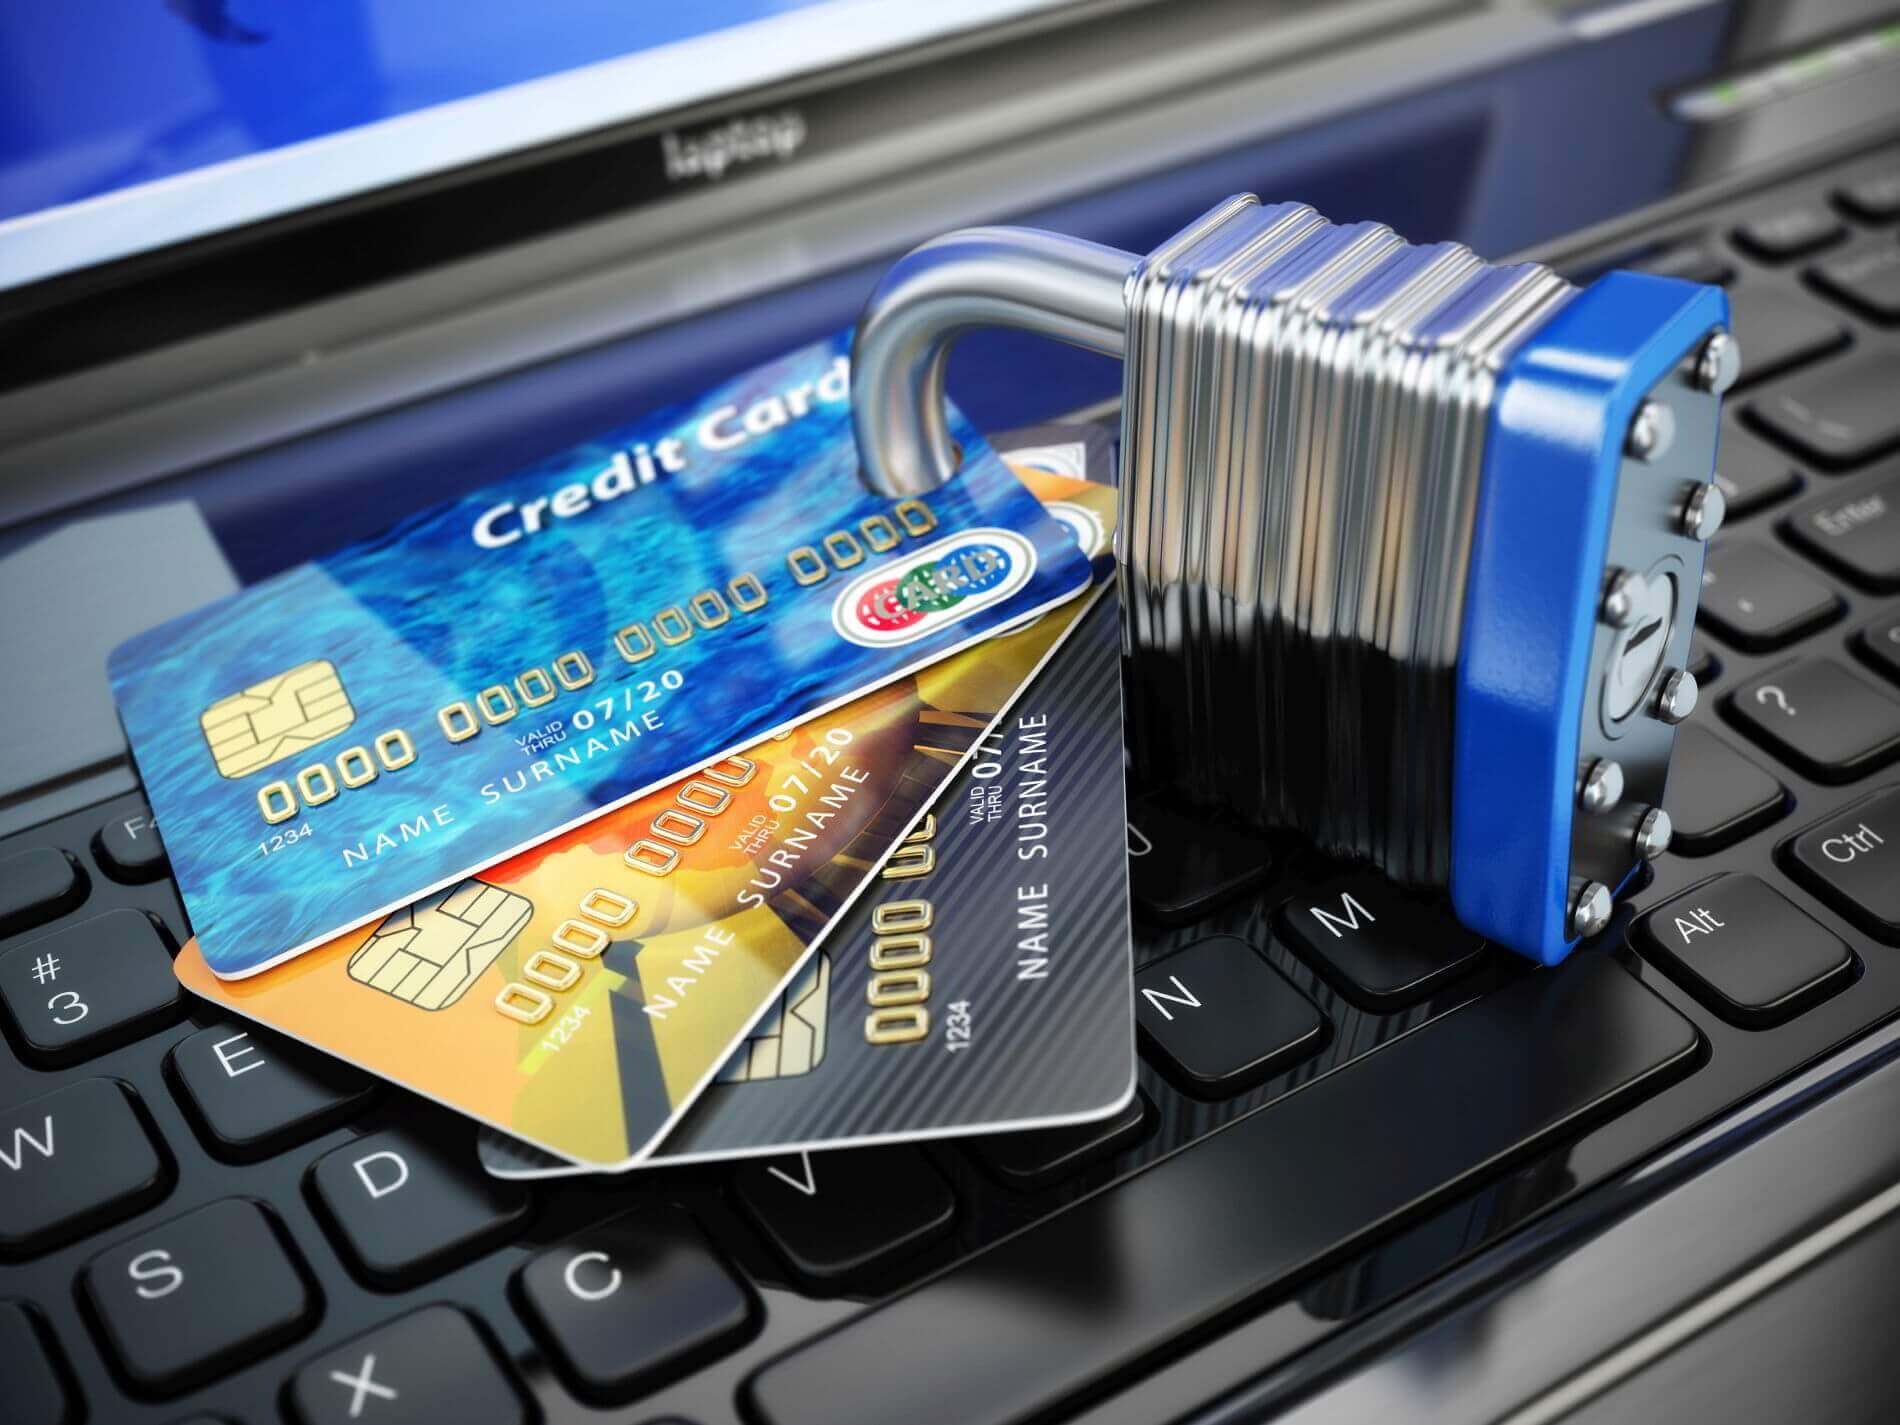 thema-cybersecurity-onlineaankopen-creditcard_foto